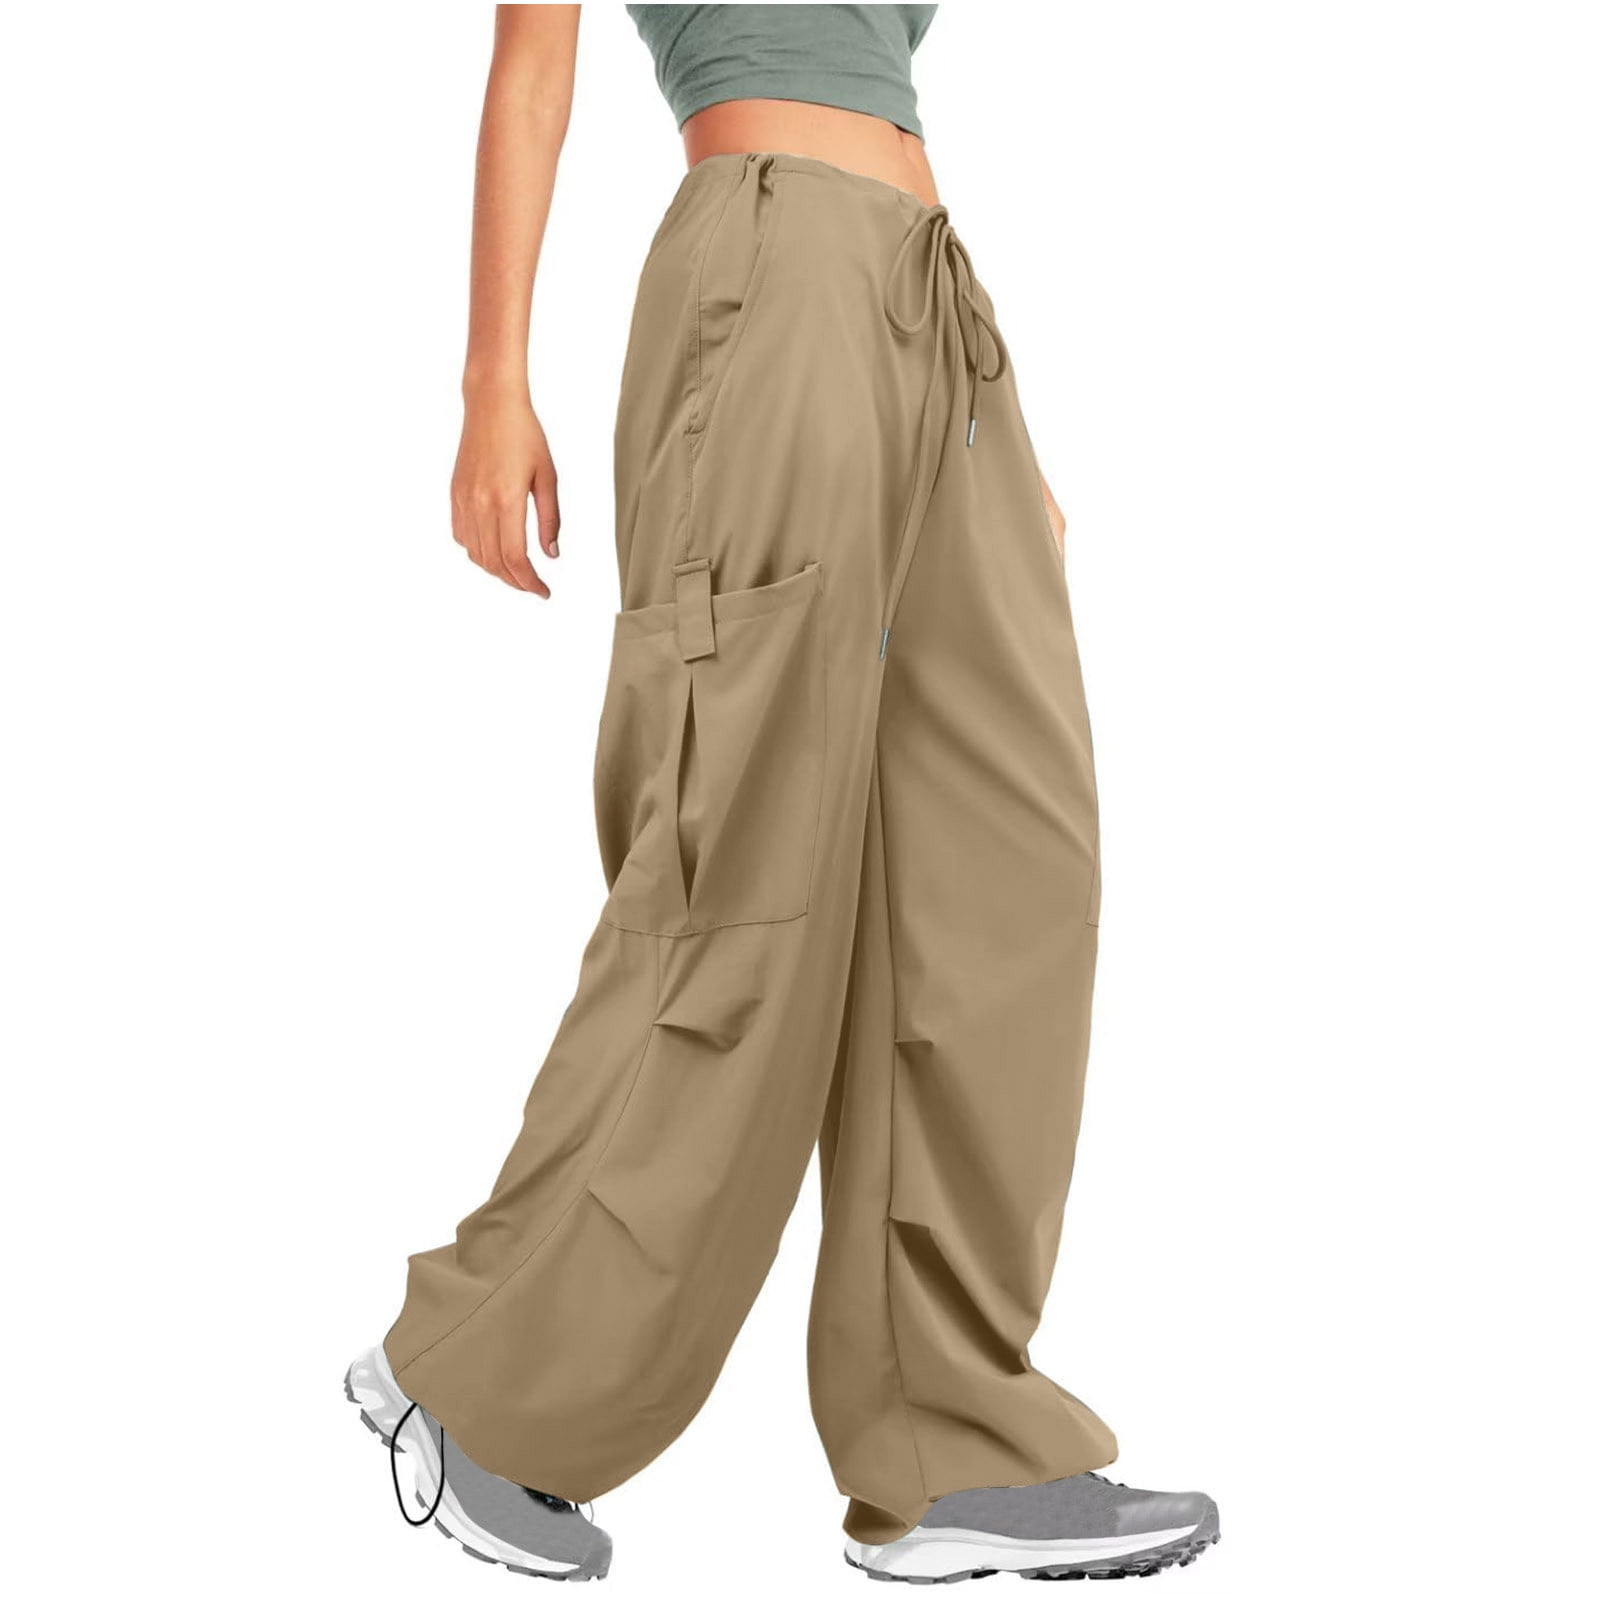 Capri Pants for Women Womens High Waisted Baggy Cargo Pants